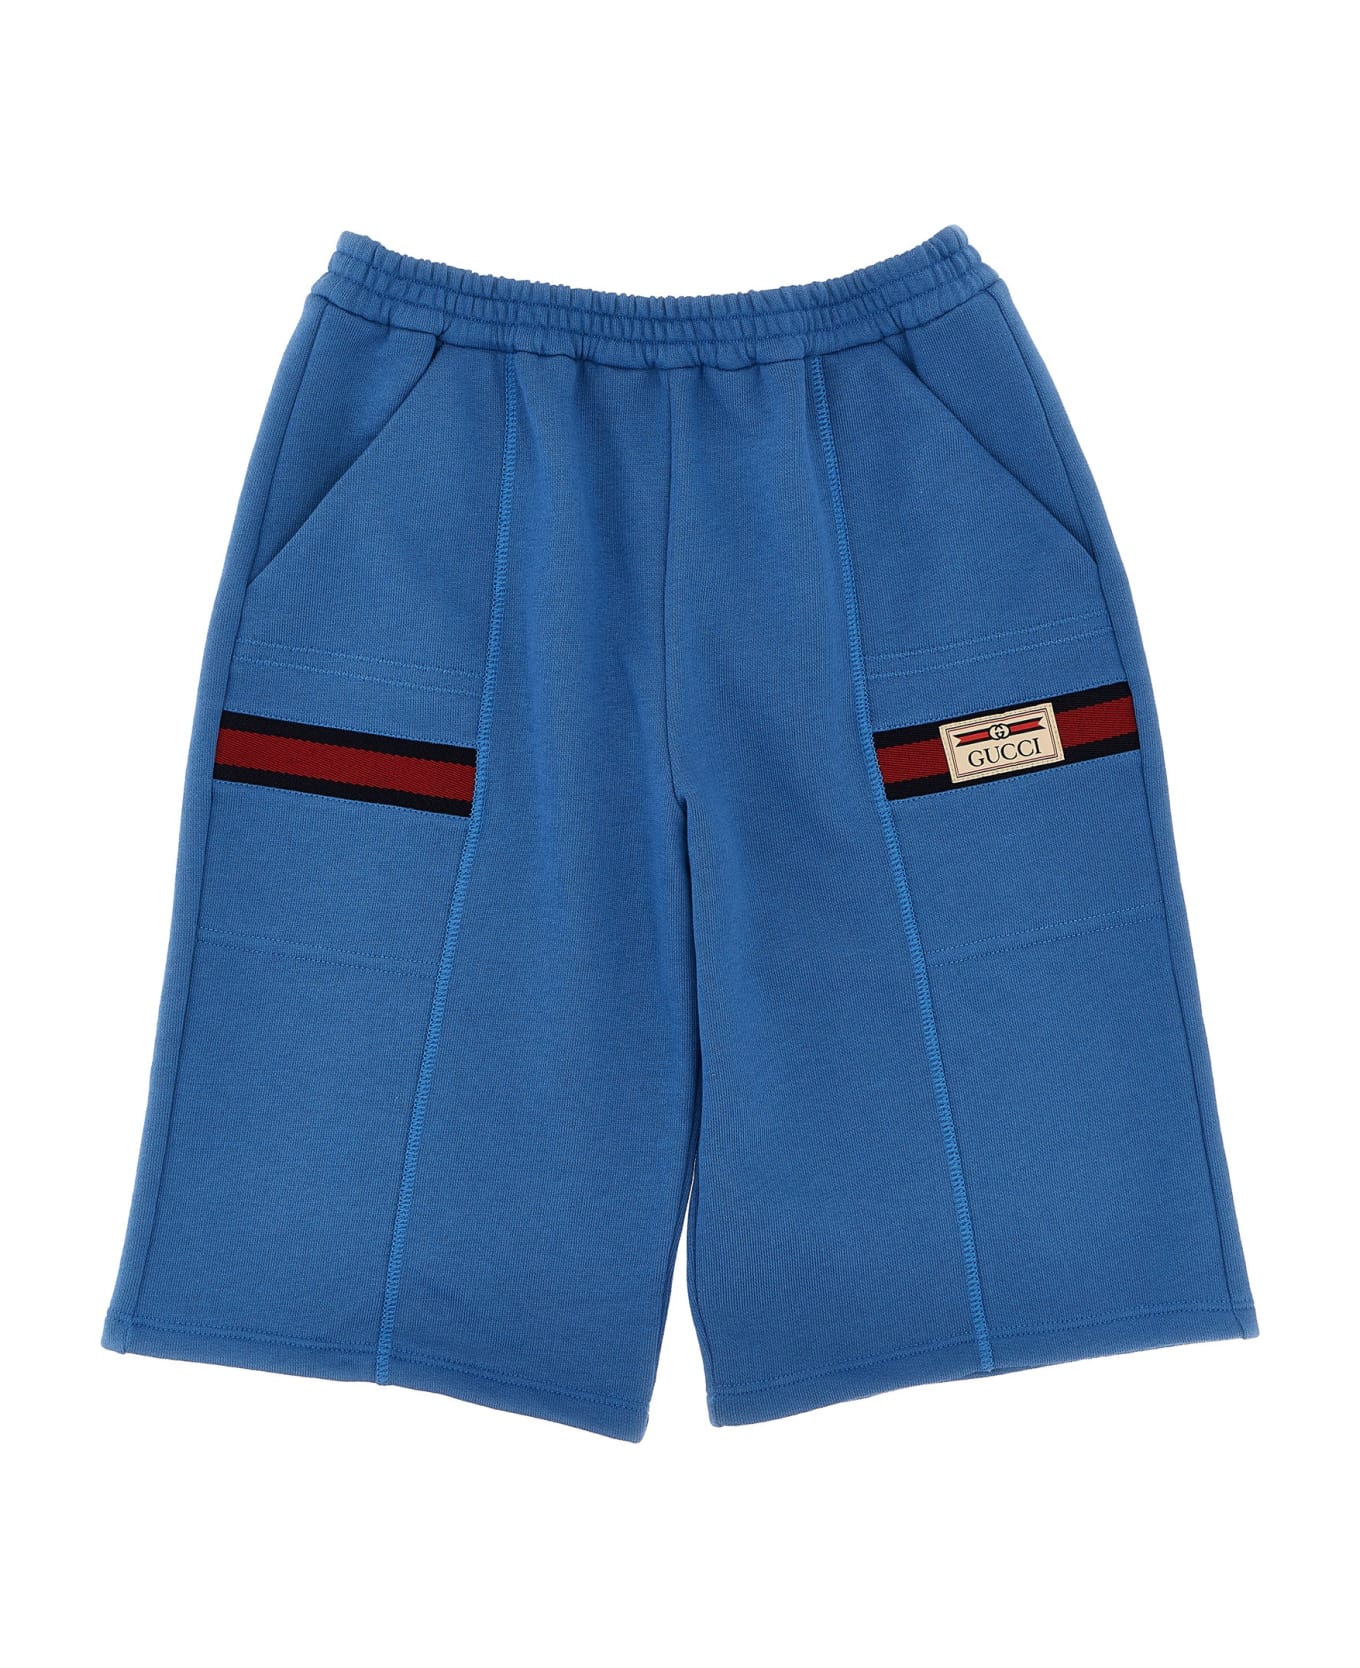 Gucci Logo Bermuda Shorts - Blue ボトムス